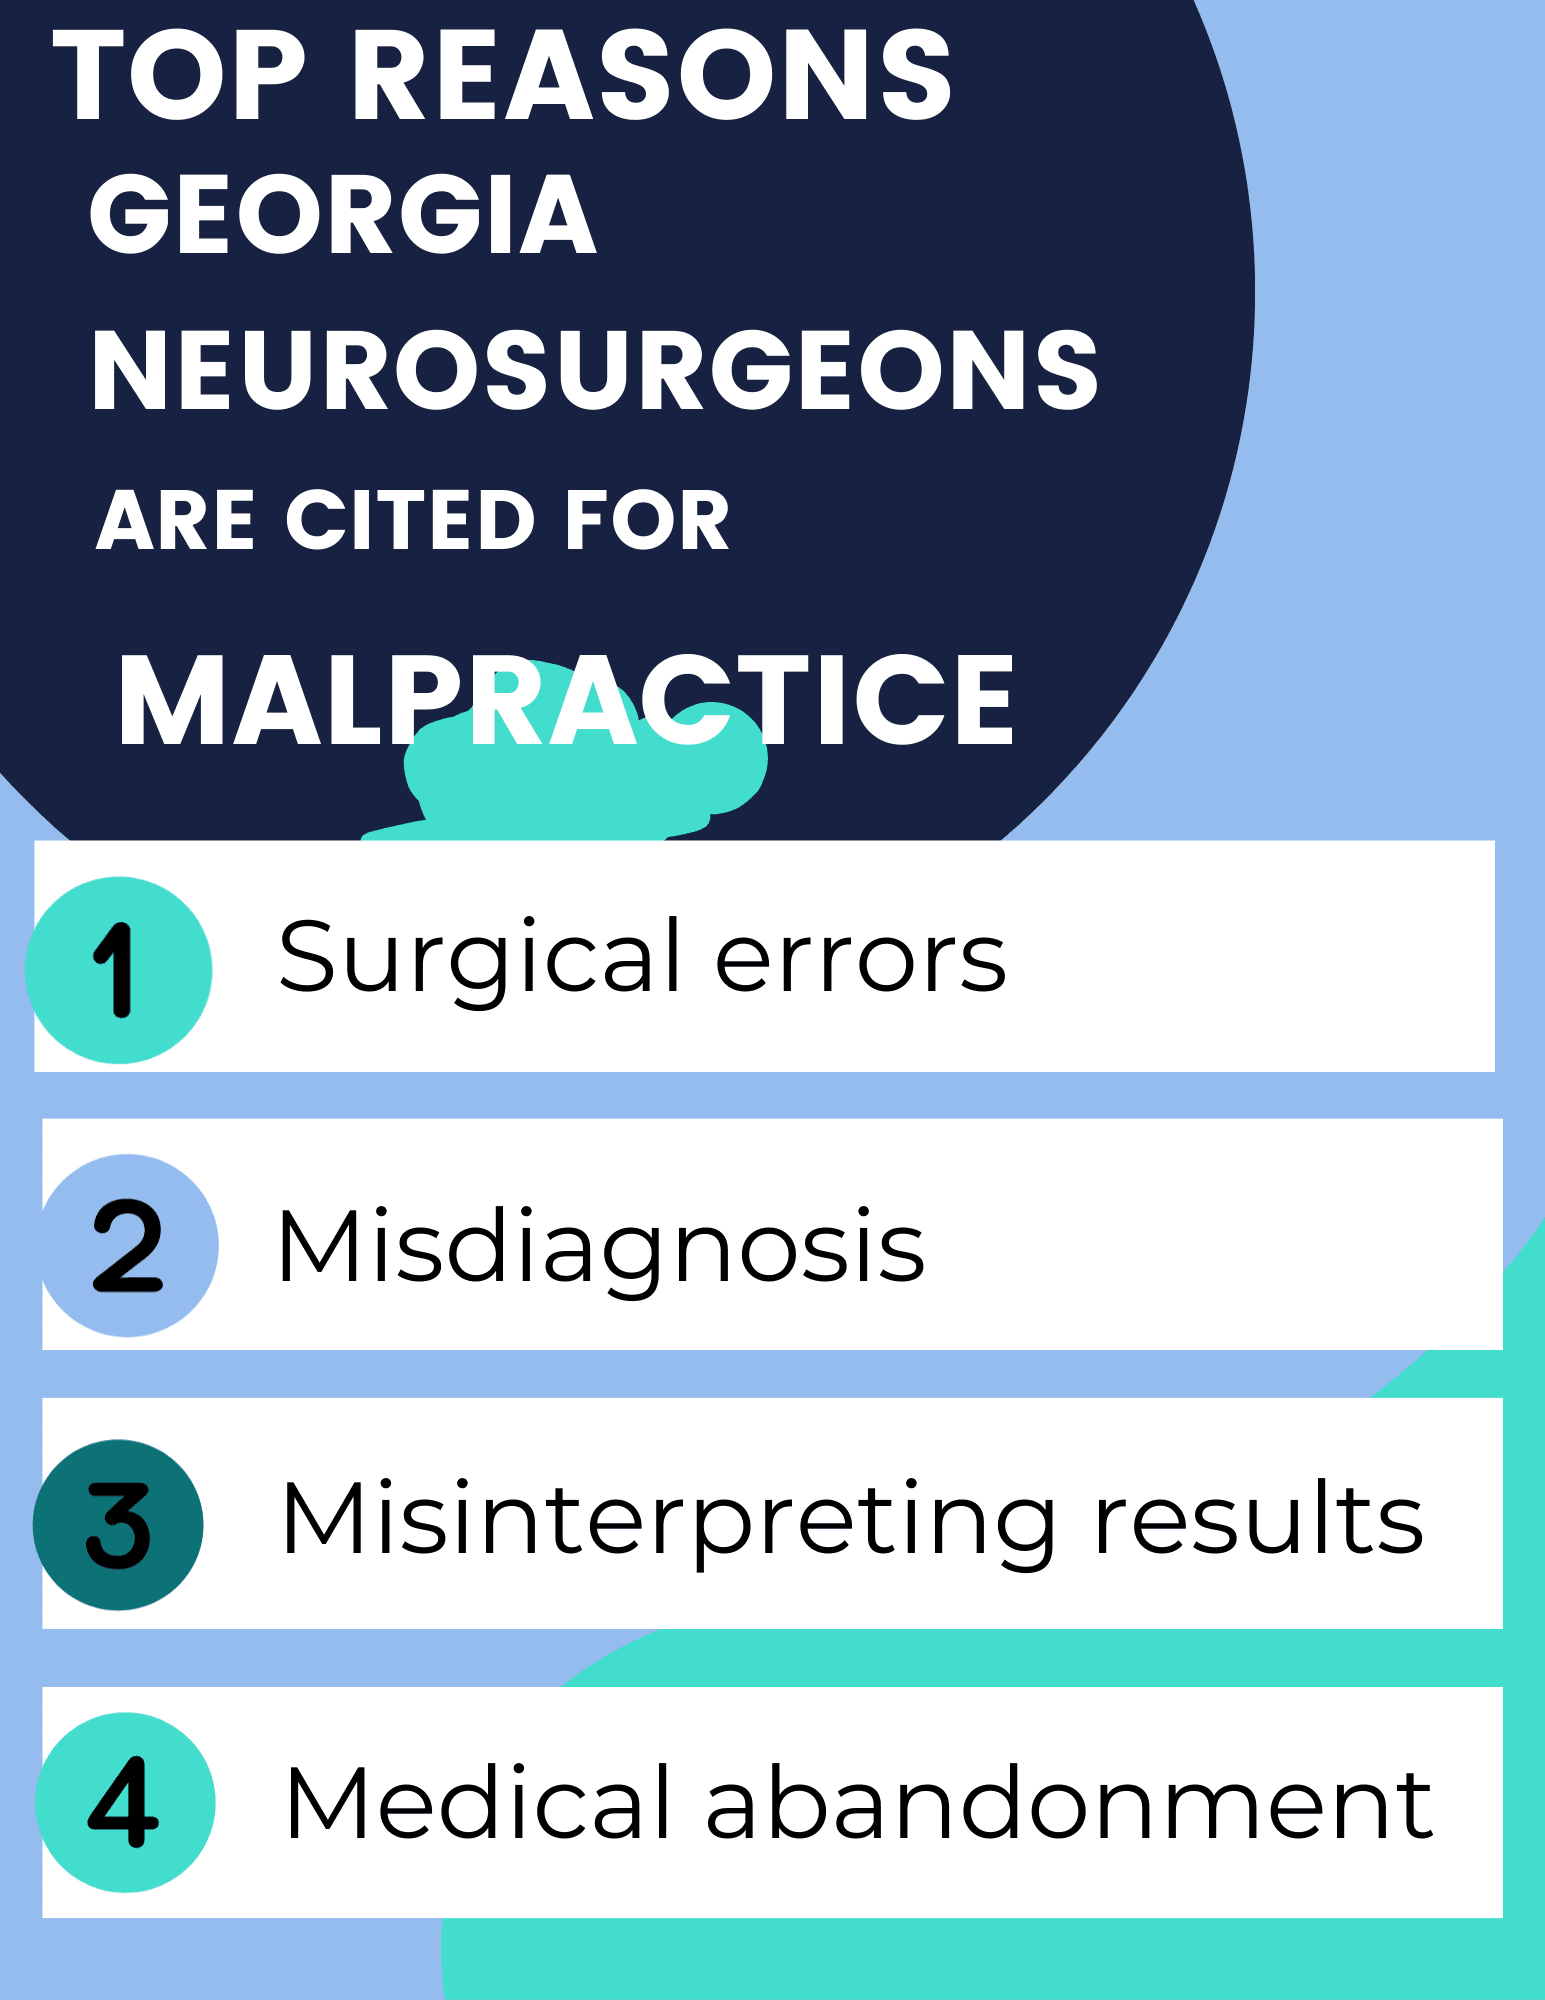 Top reasons Georgia neurosurgeons are cited